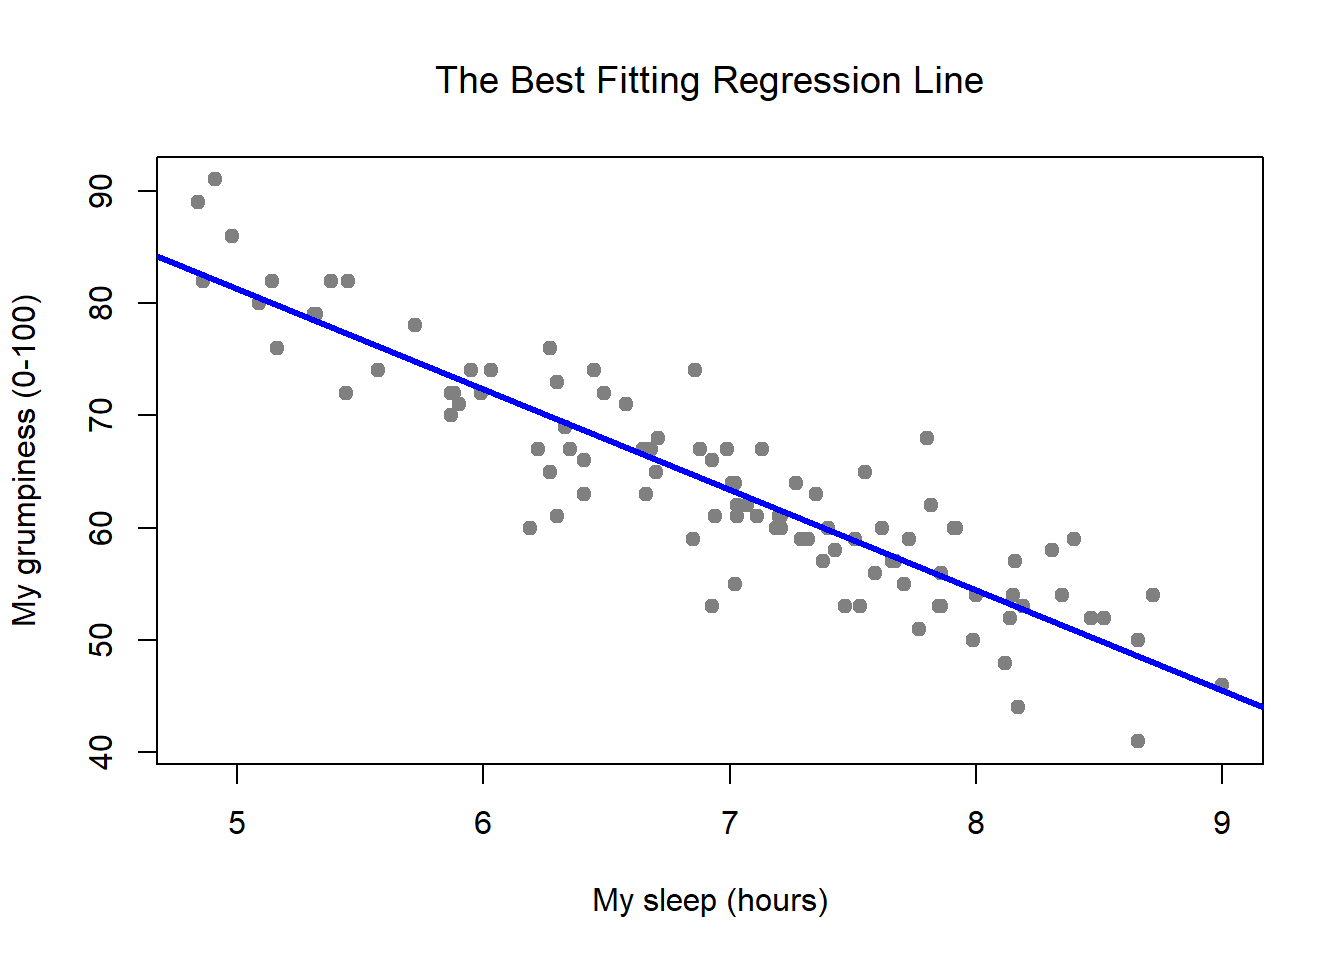 linear regression equation prediction calculator